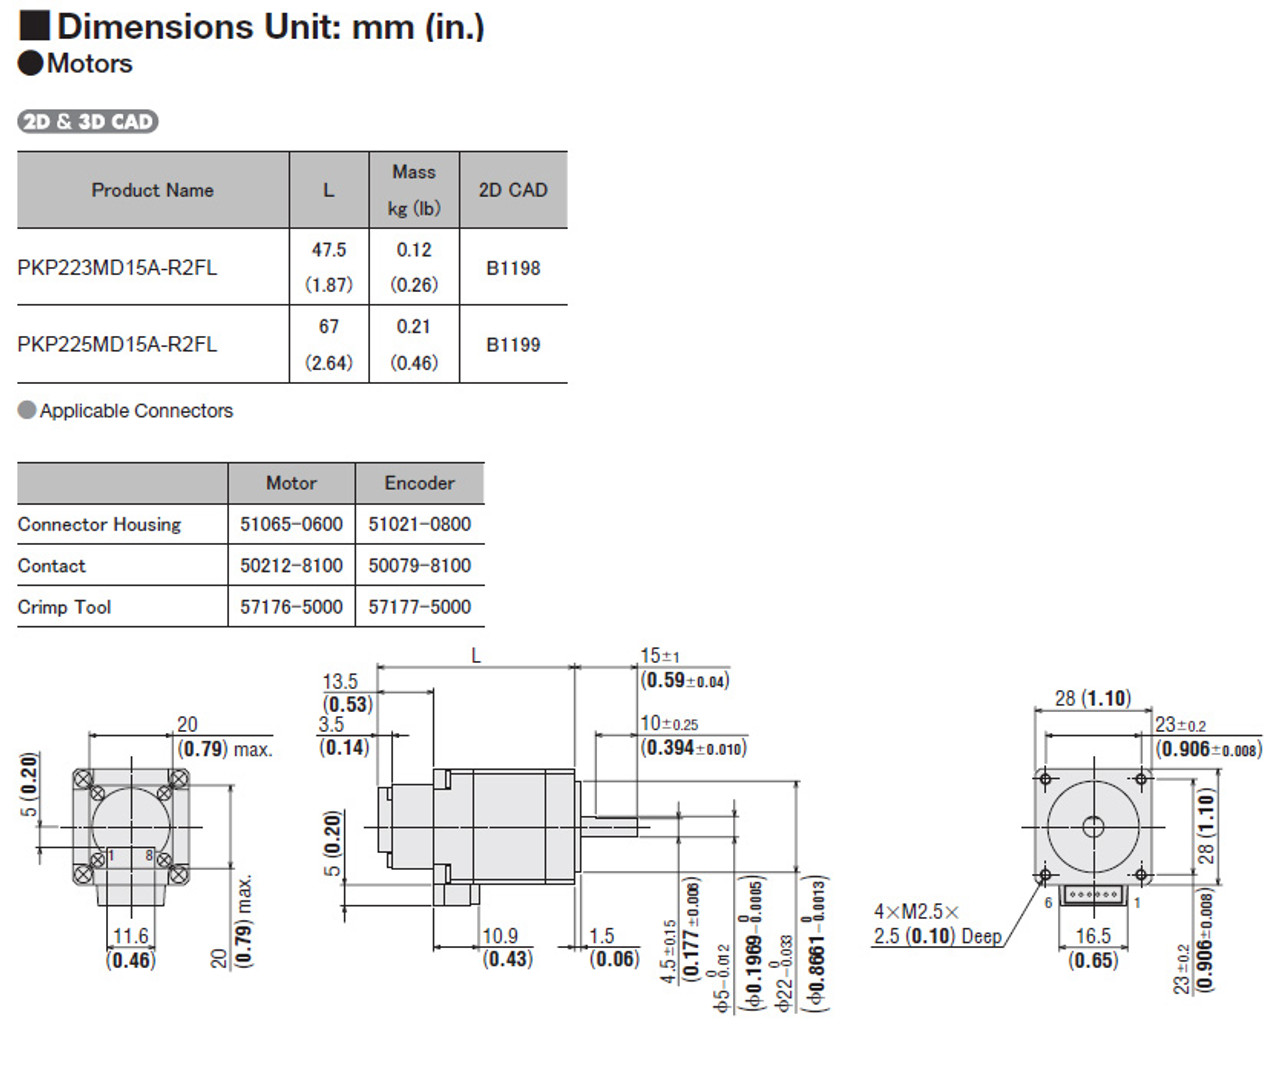 PKP225MD15A-R2FL - Dimensions